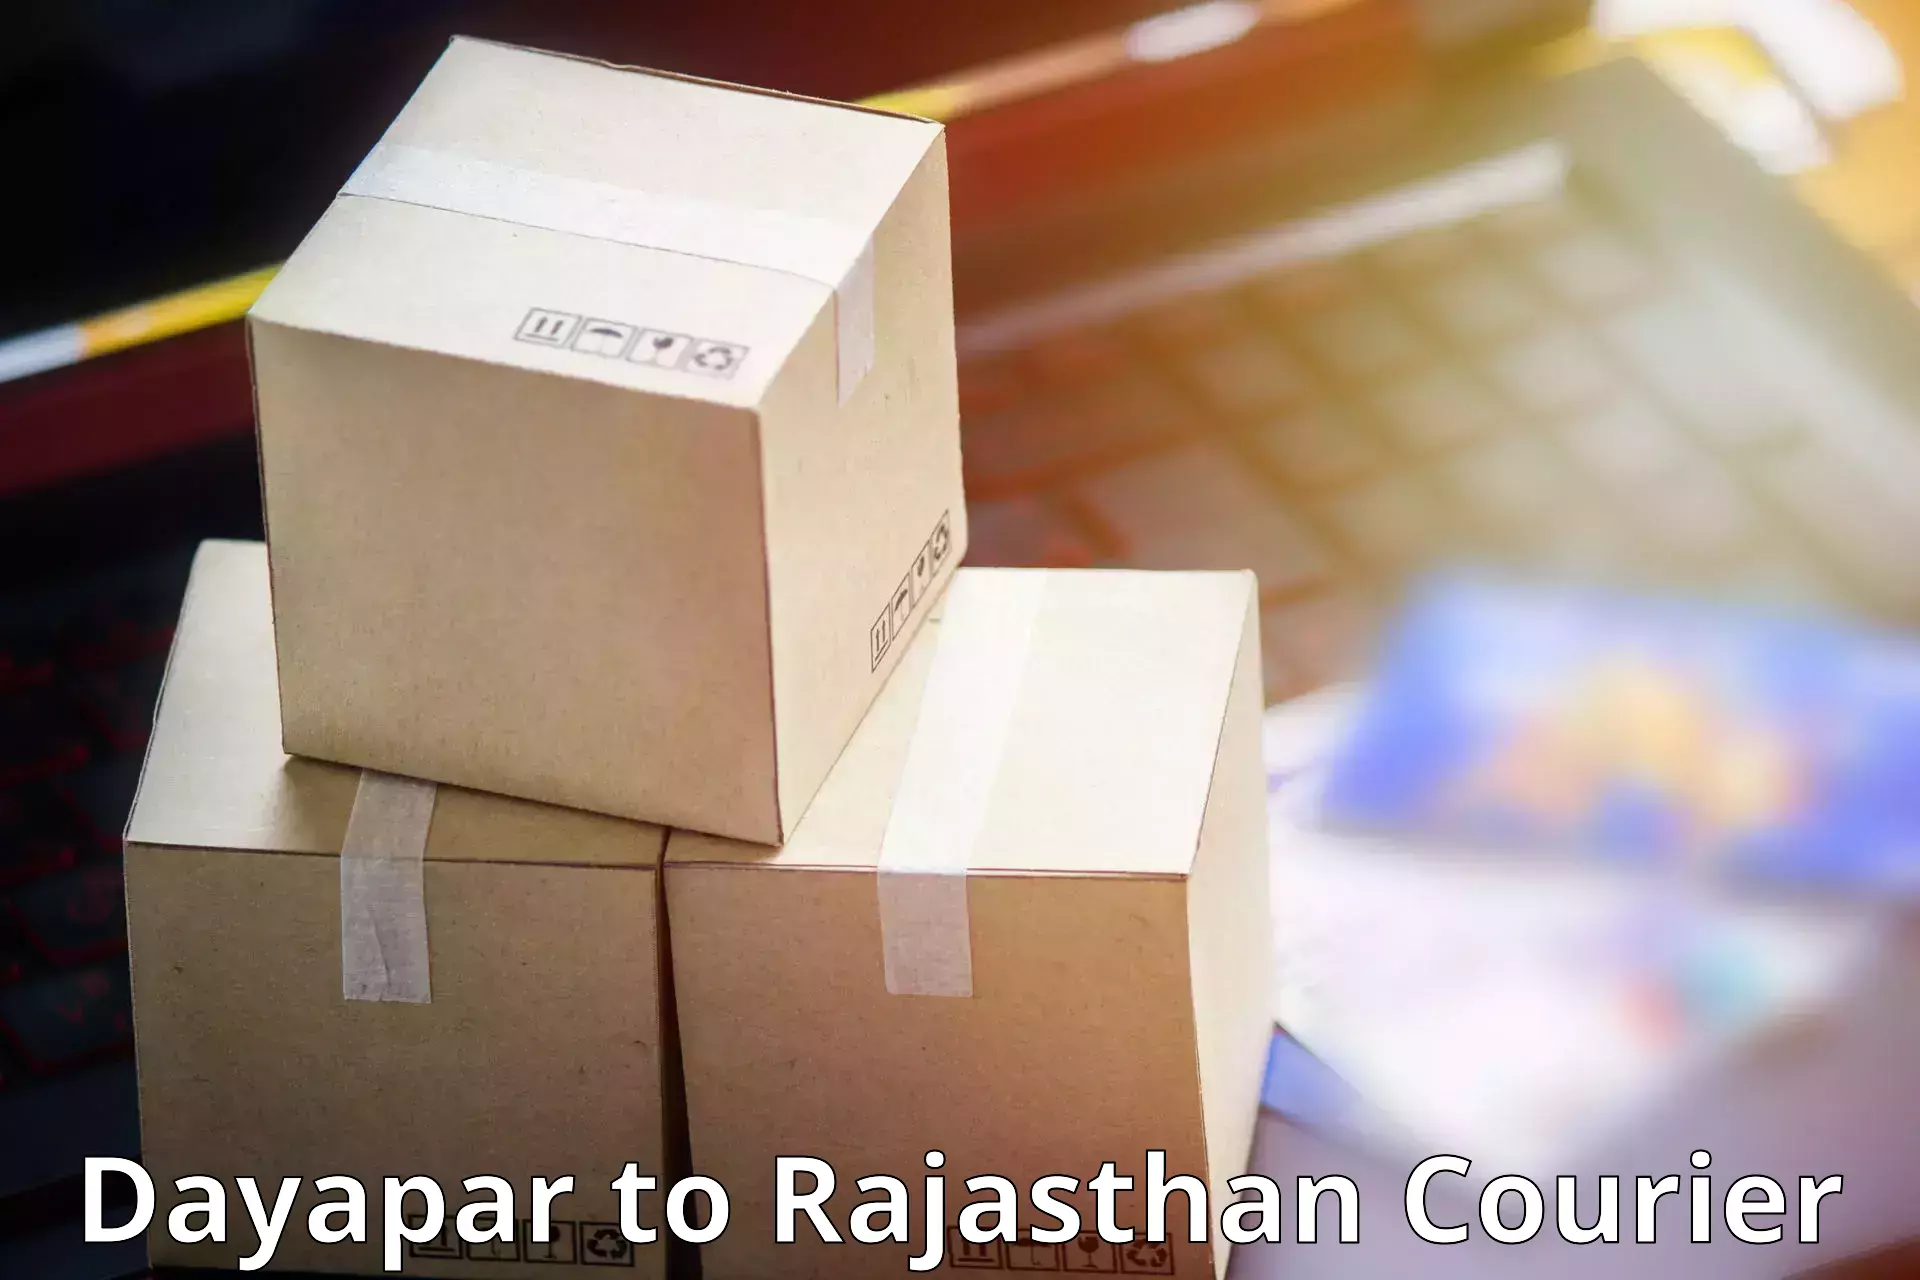 Small business couriers Dayapar to Pokhran